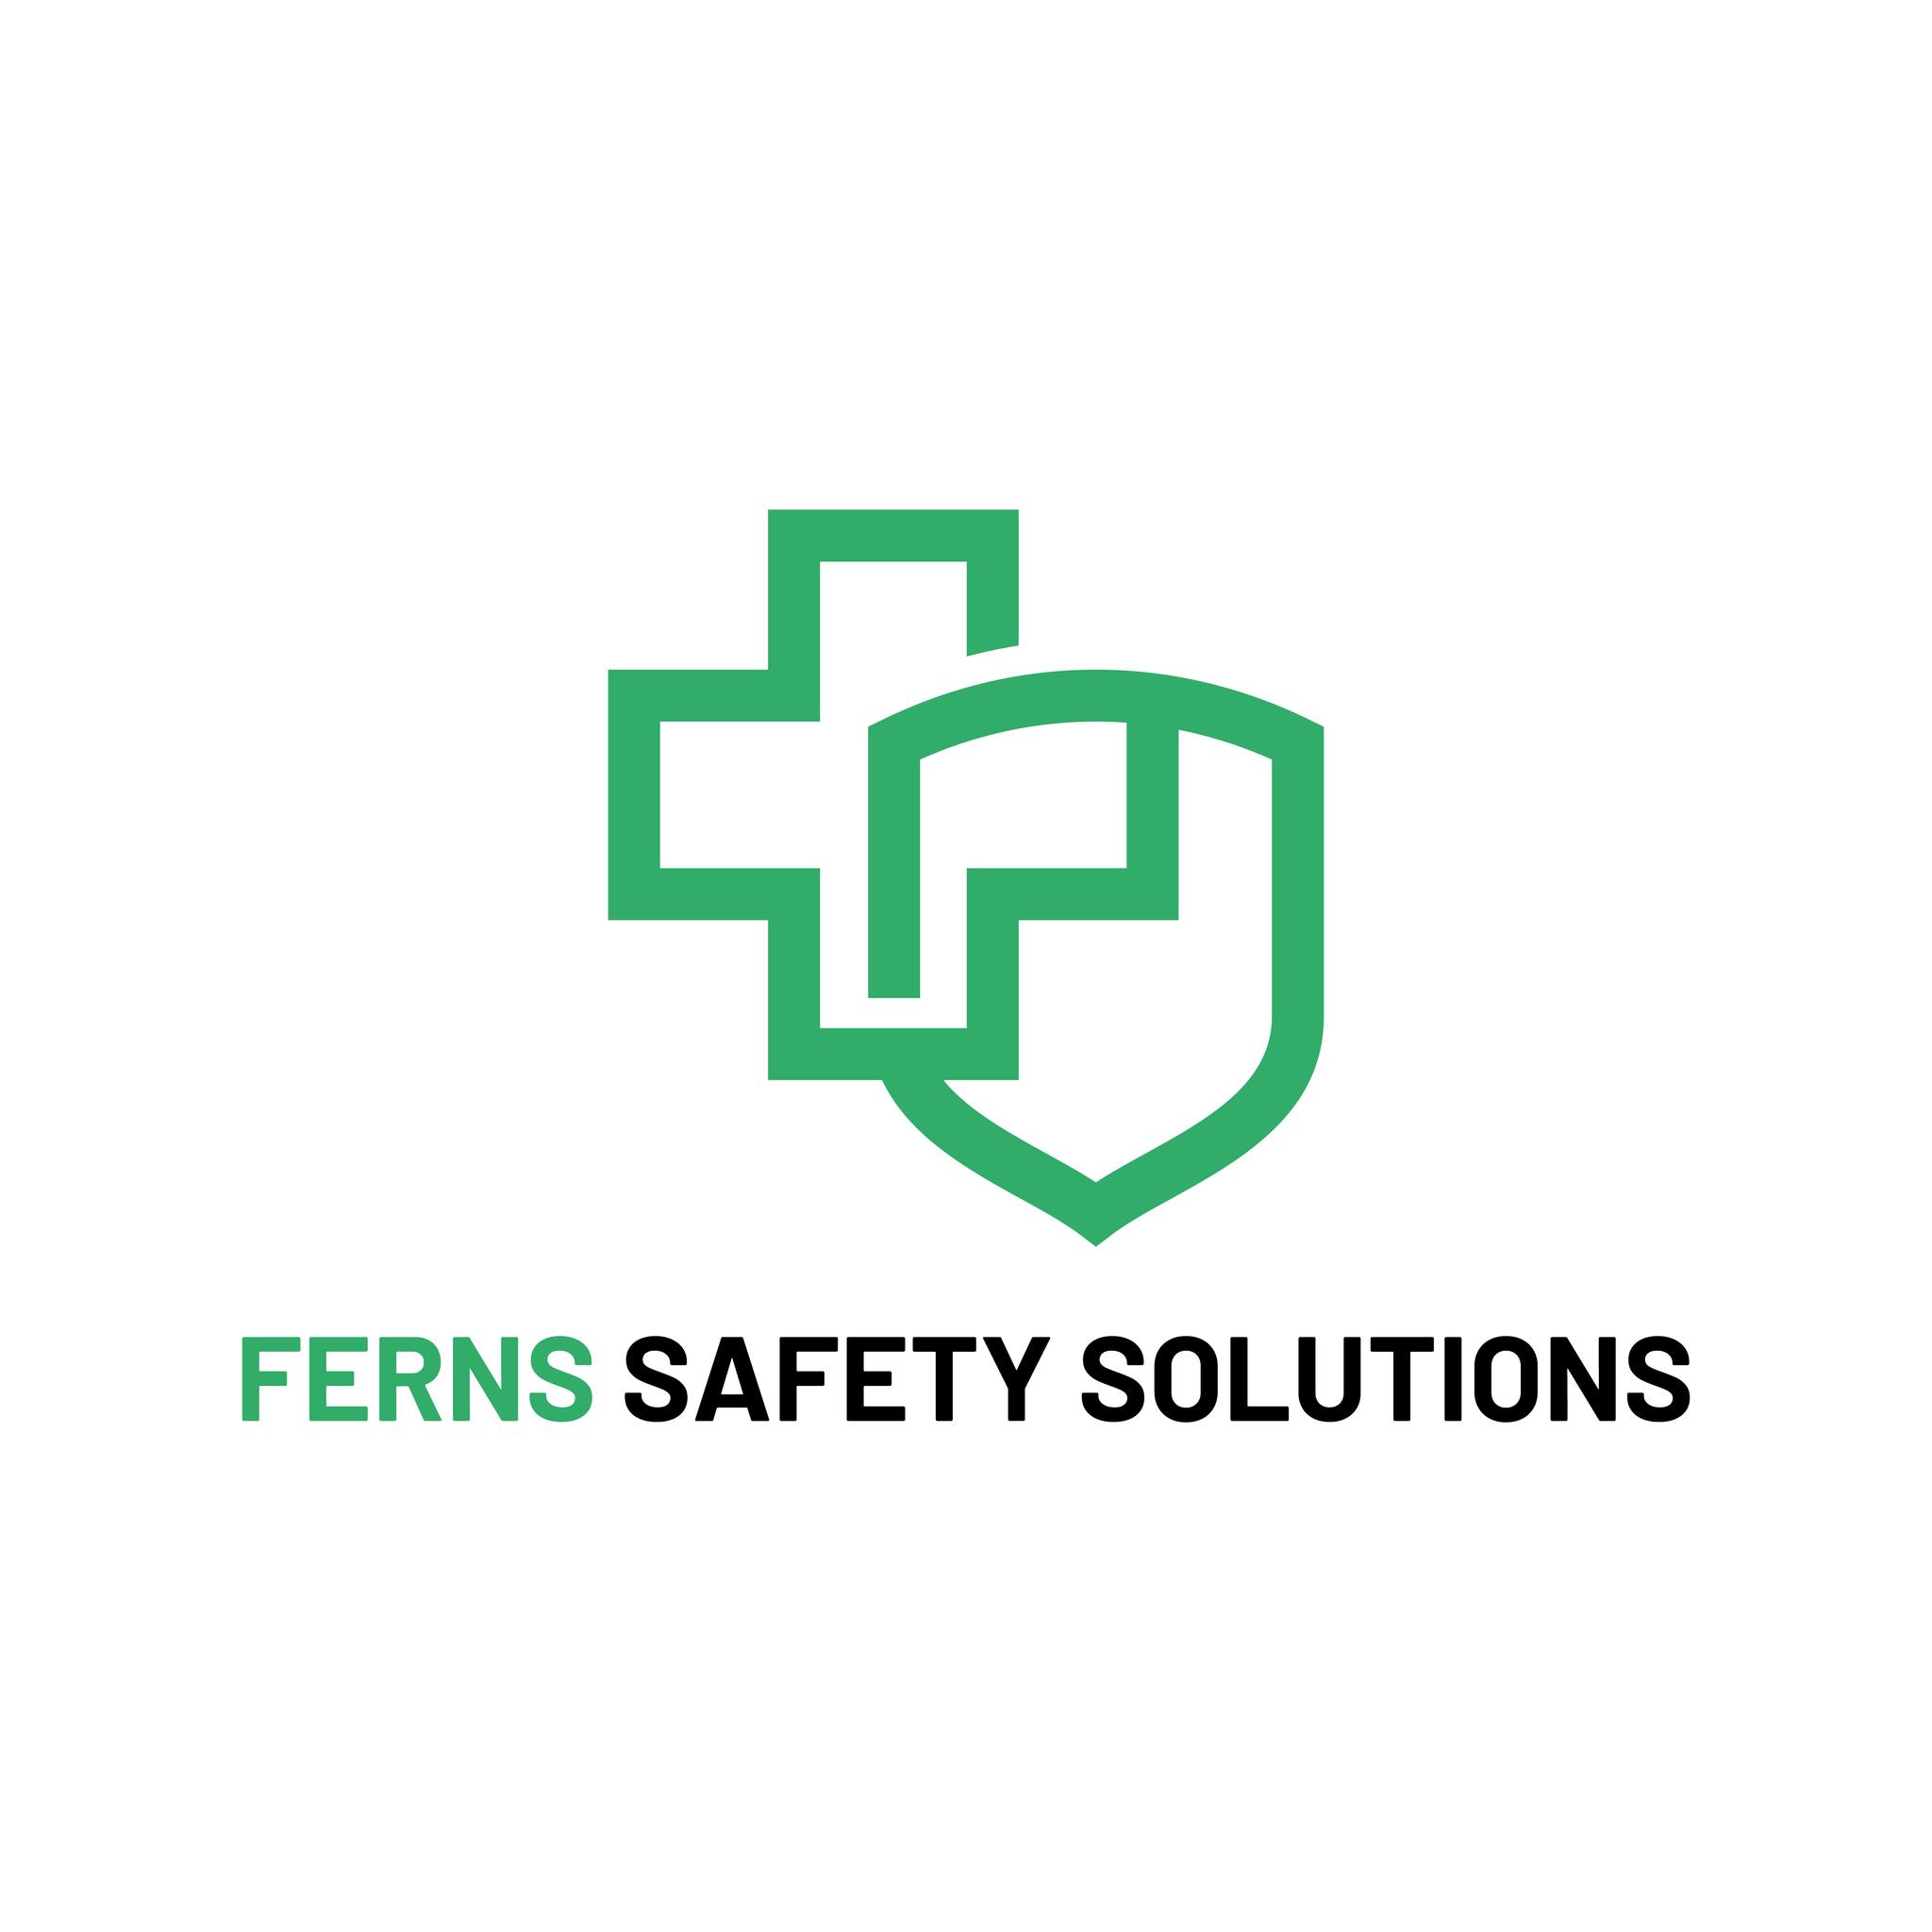 Ferns 1st [Ferns Safety Solutions]'s logo